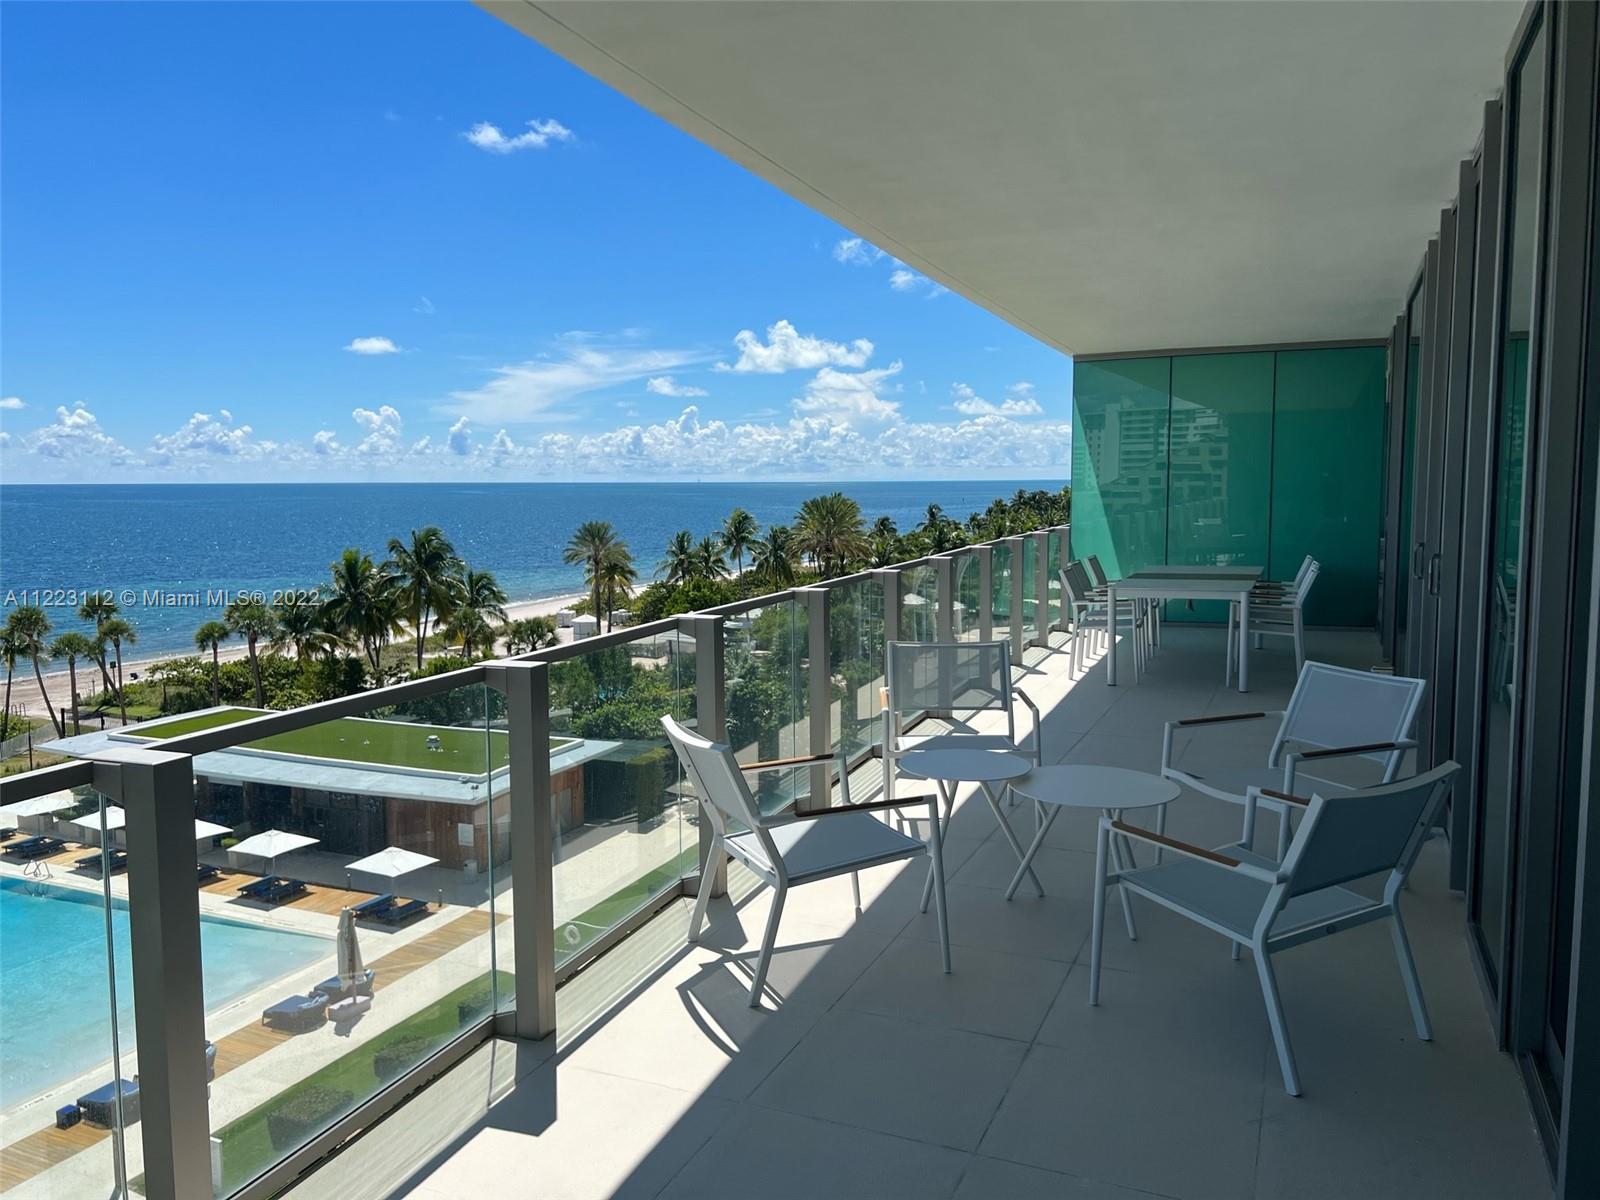 Rental Property at 360 Ocean Dr 604S, Key Biscayne, Miami-Dade County, Florida - Bedrooms: 2 
Bathrooms: 4  - $20,000 MO.